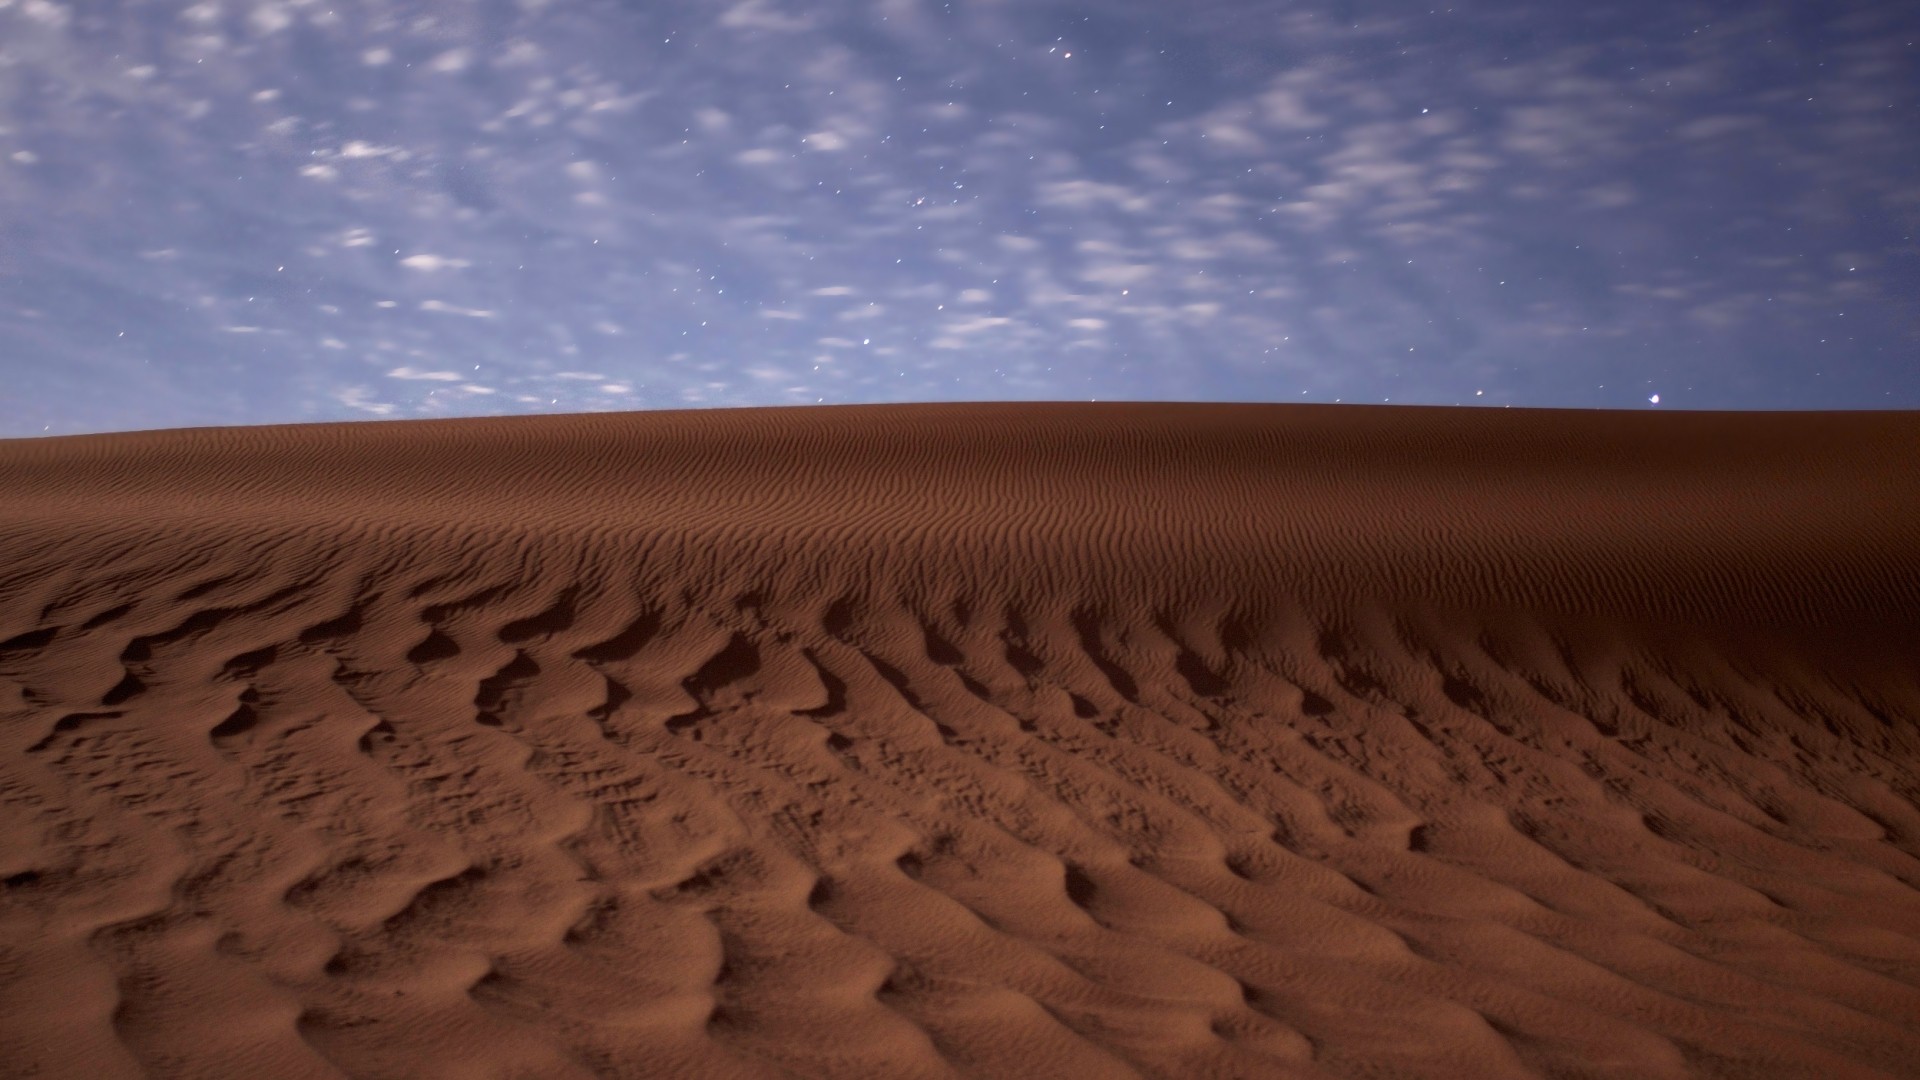 General 1920x1080 nature landscape desert sand dunes night stars clouds long exposure blurred